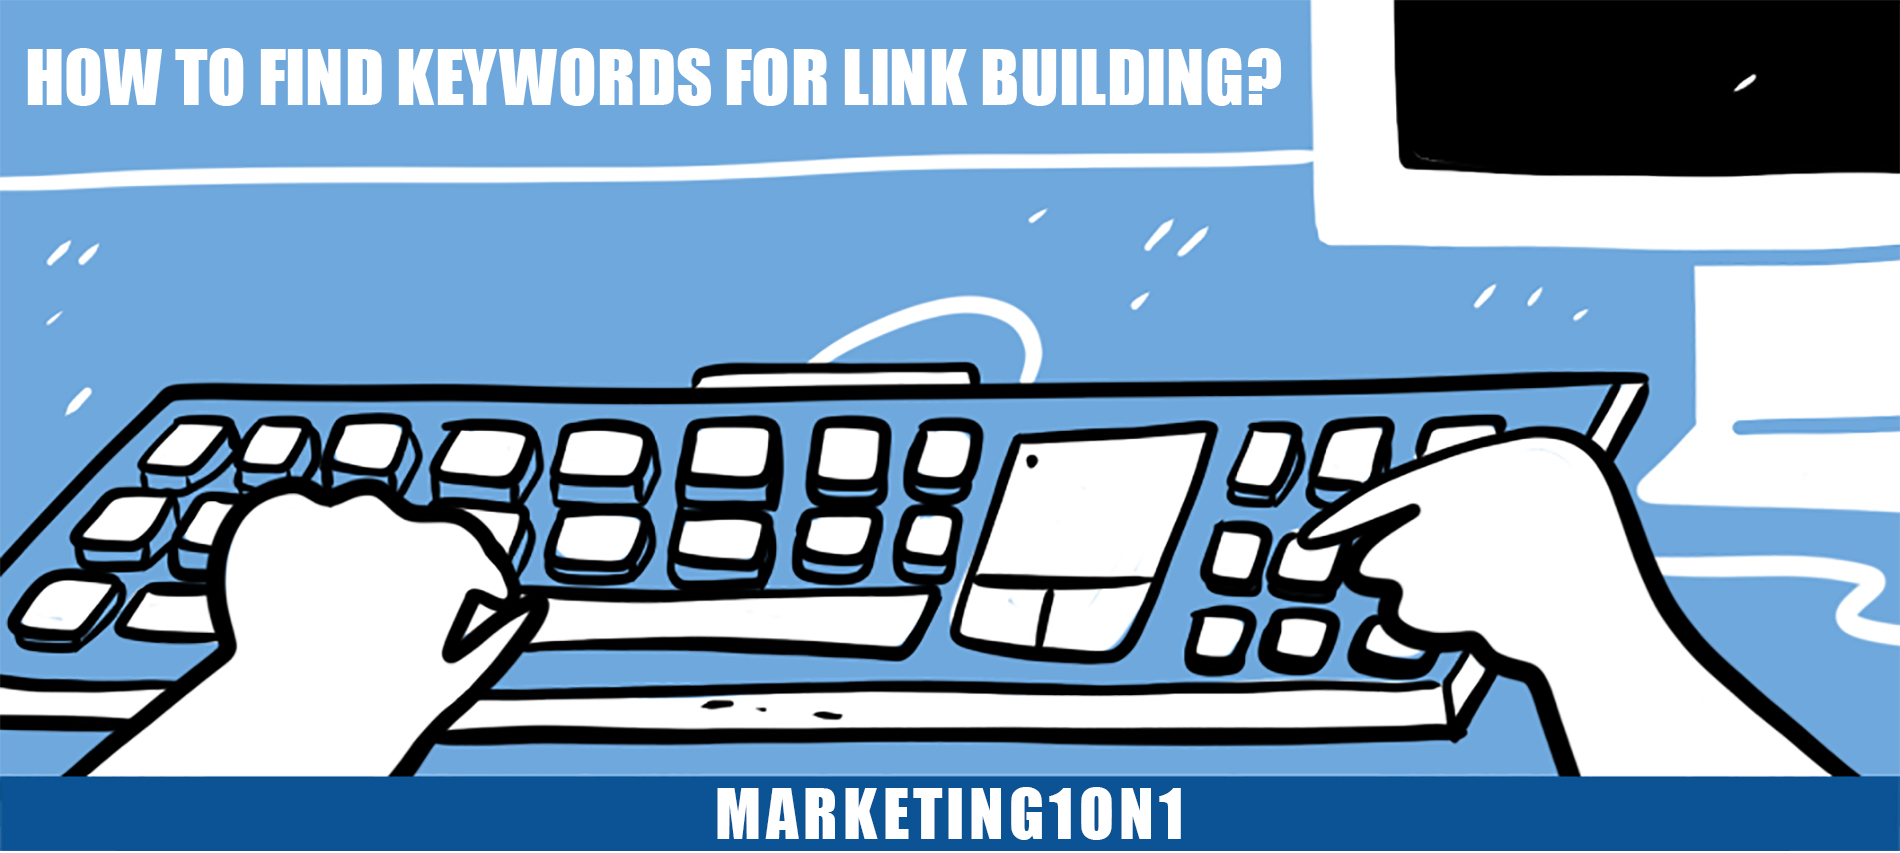 How to find keywords for link building?